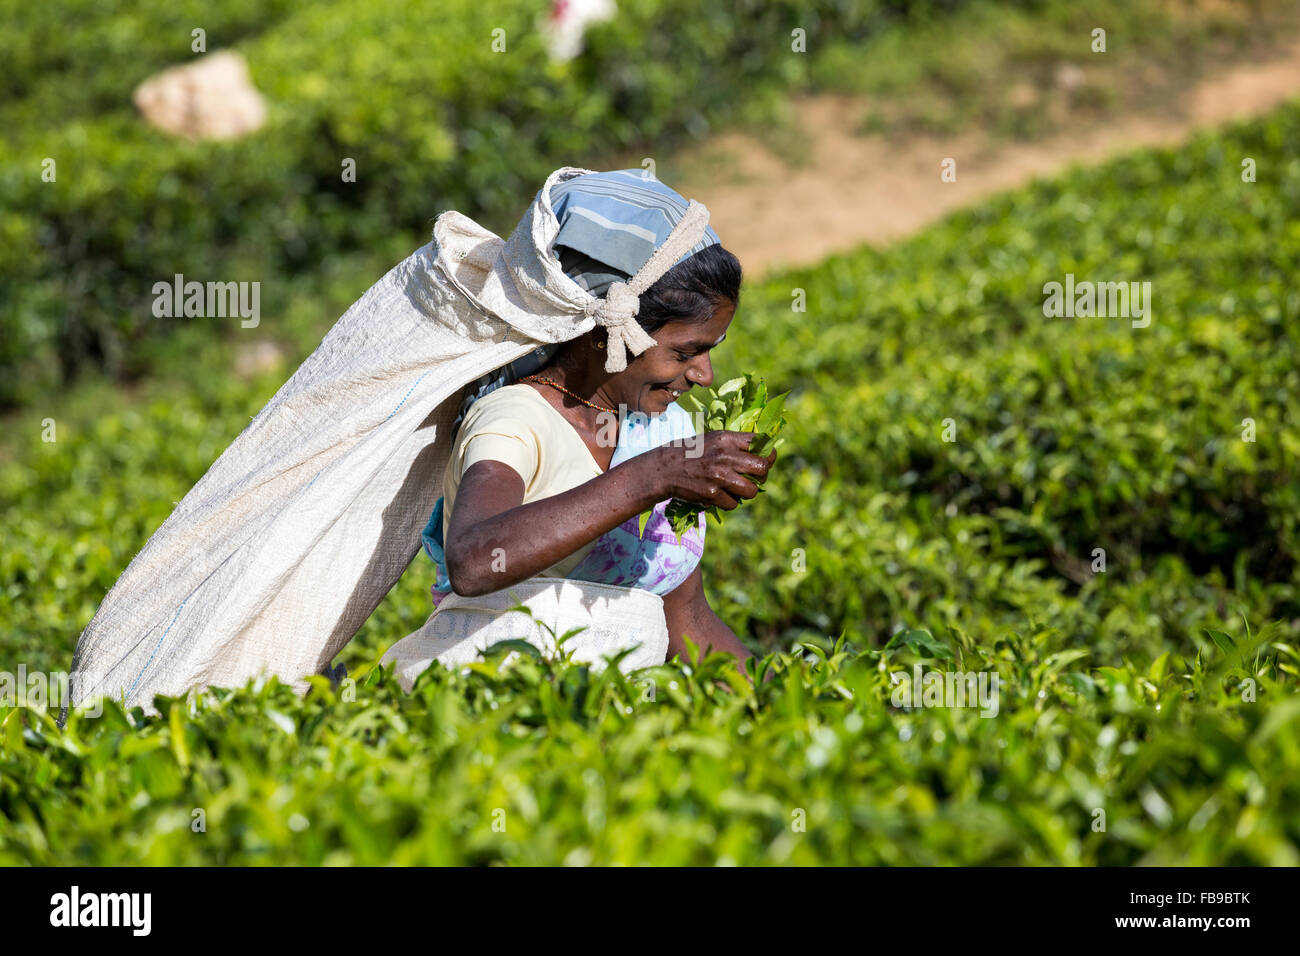 Tea picking, Tea plantation, Central Province, district Hatton, neighborhood Adam's peak Sri Lanka, Asia Stock Photo